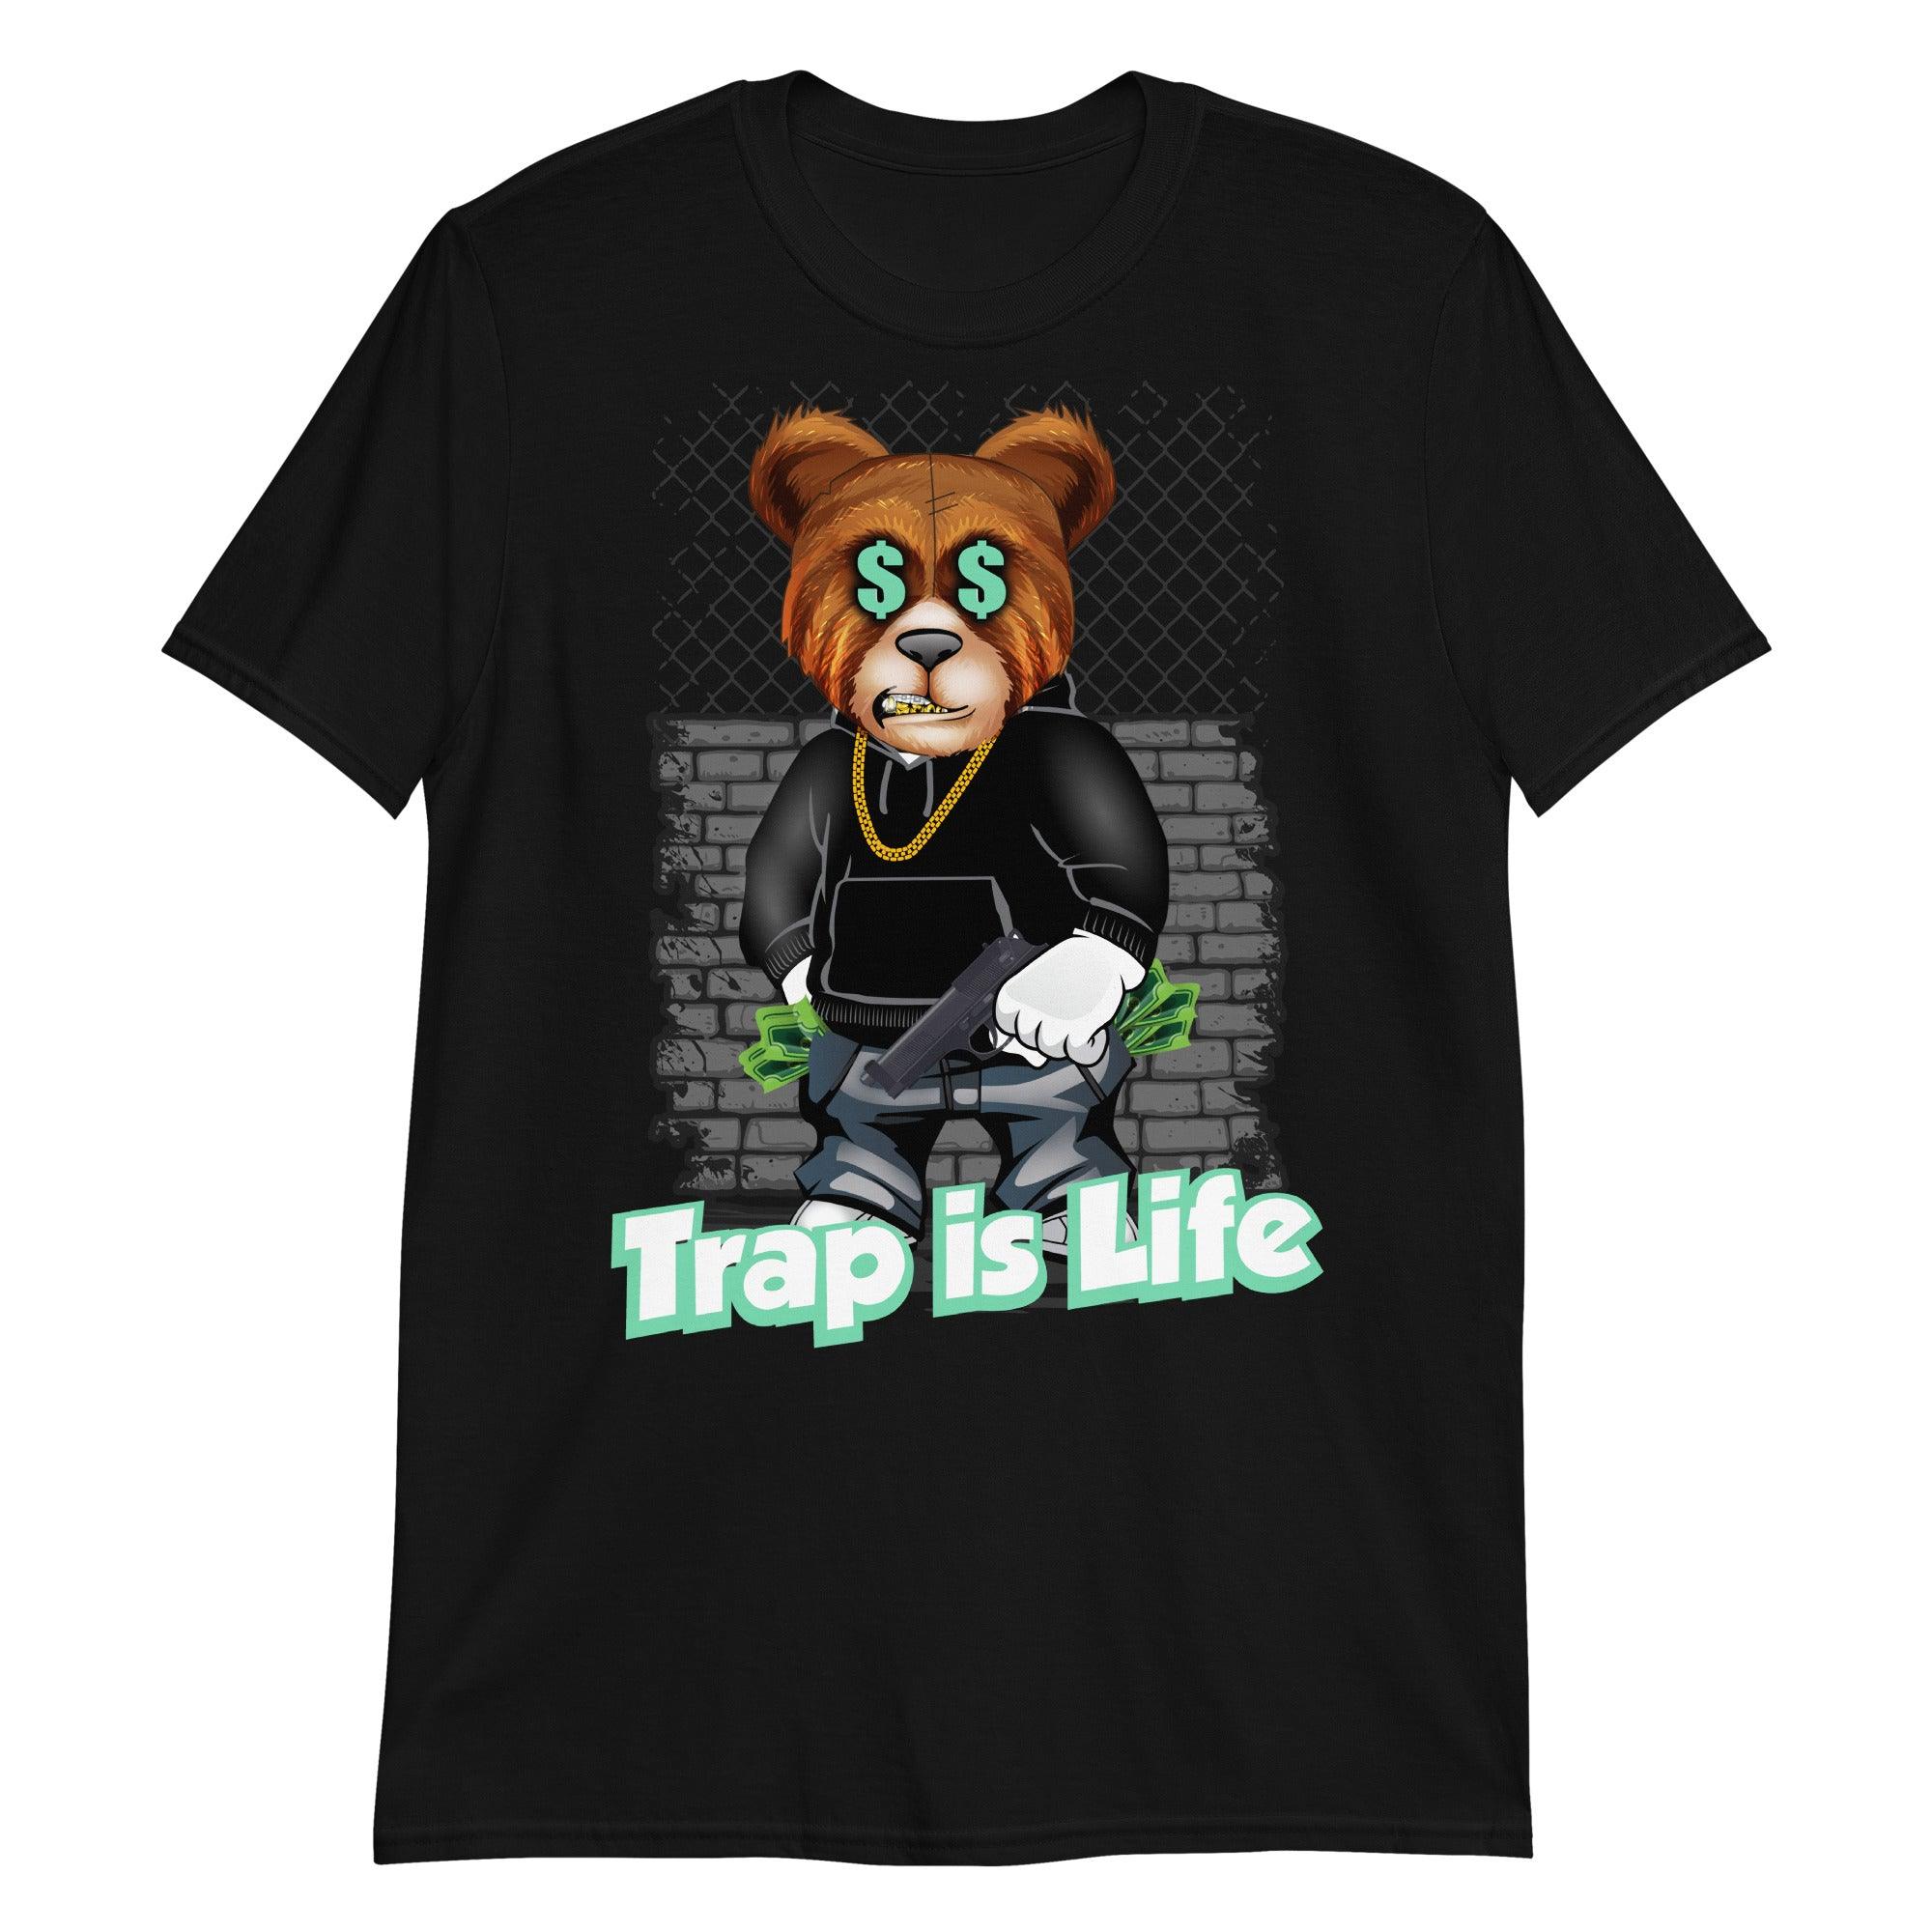 Trap is Life Shirt Nike Dunks Low Green Glow Sneakers photo